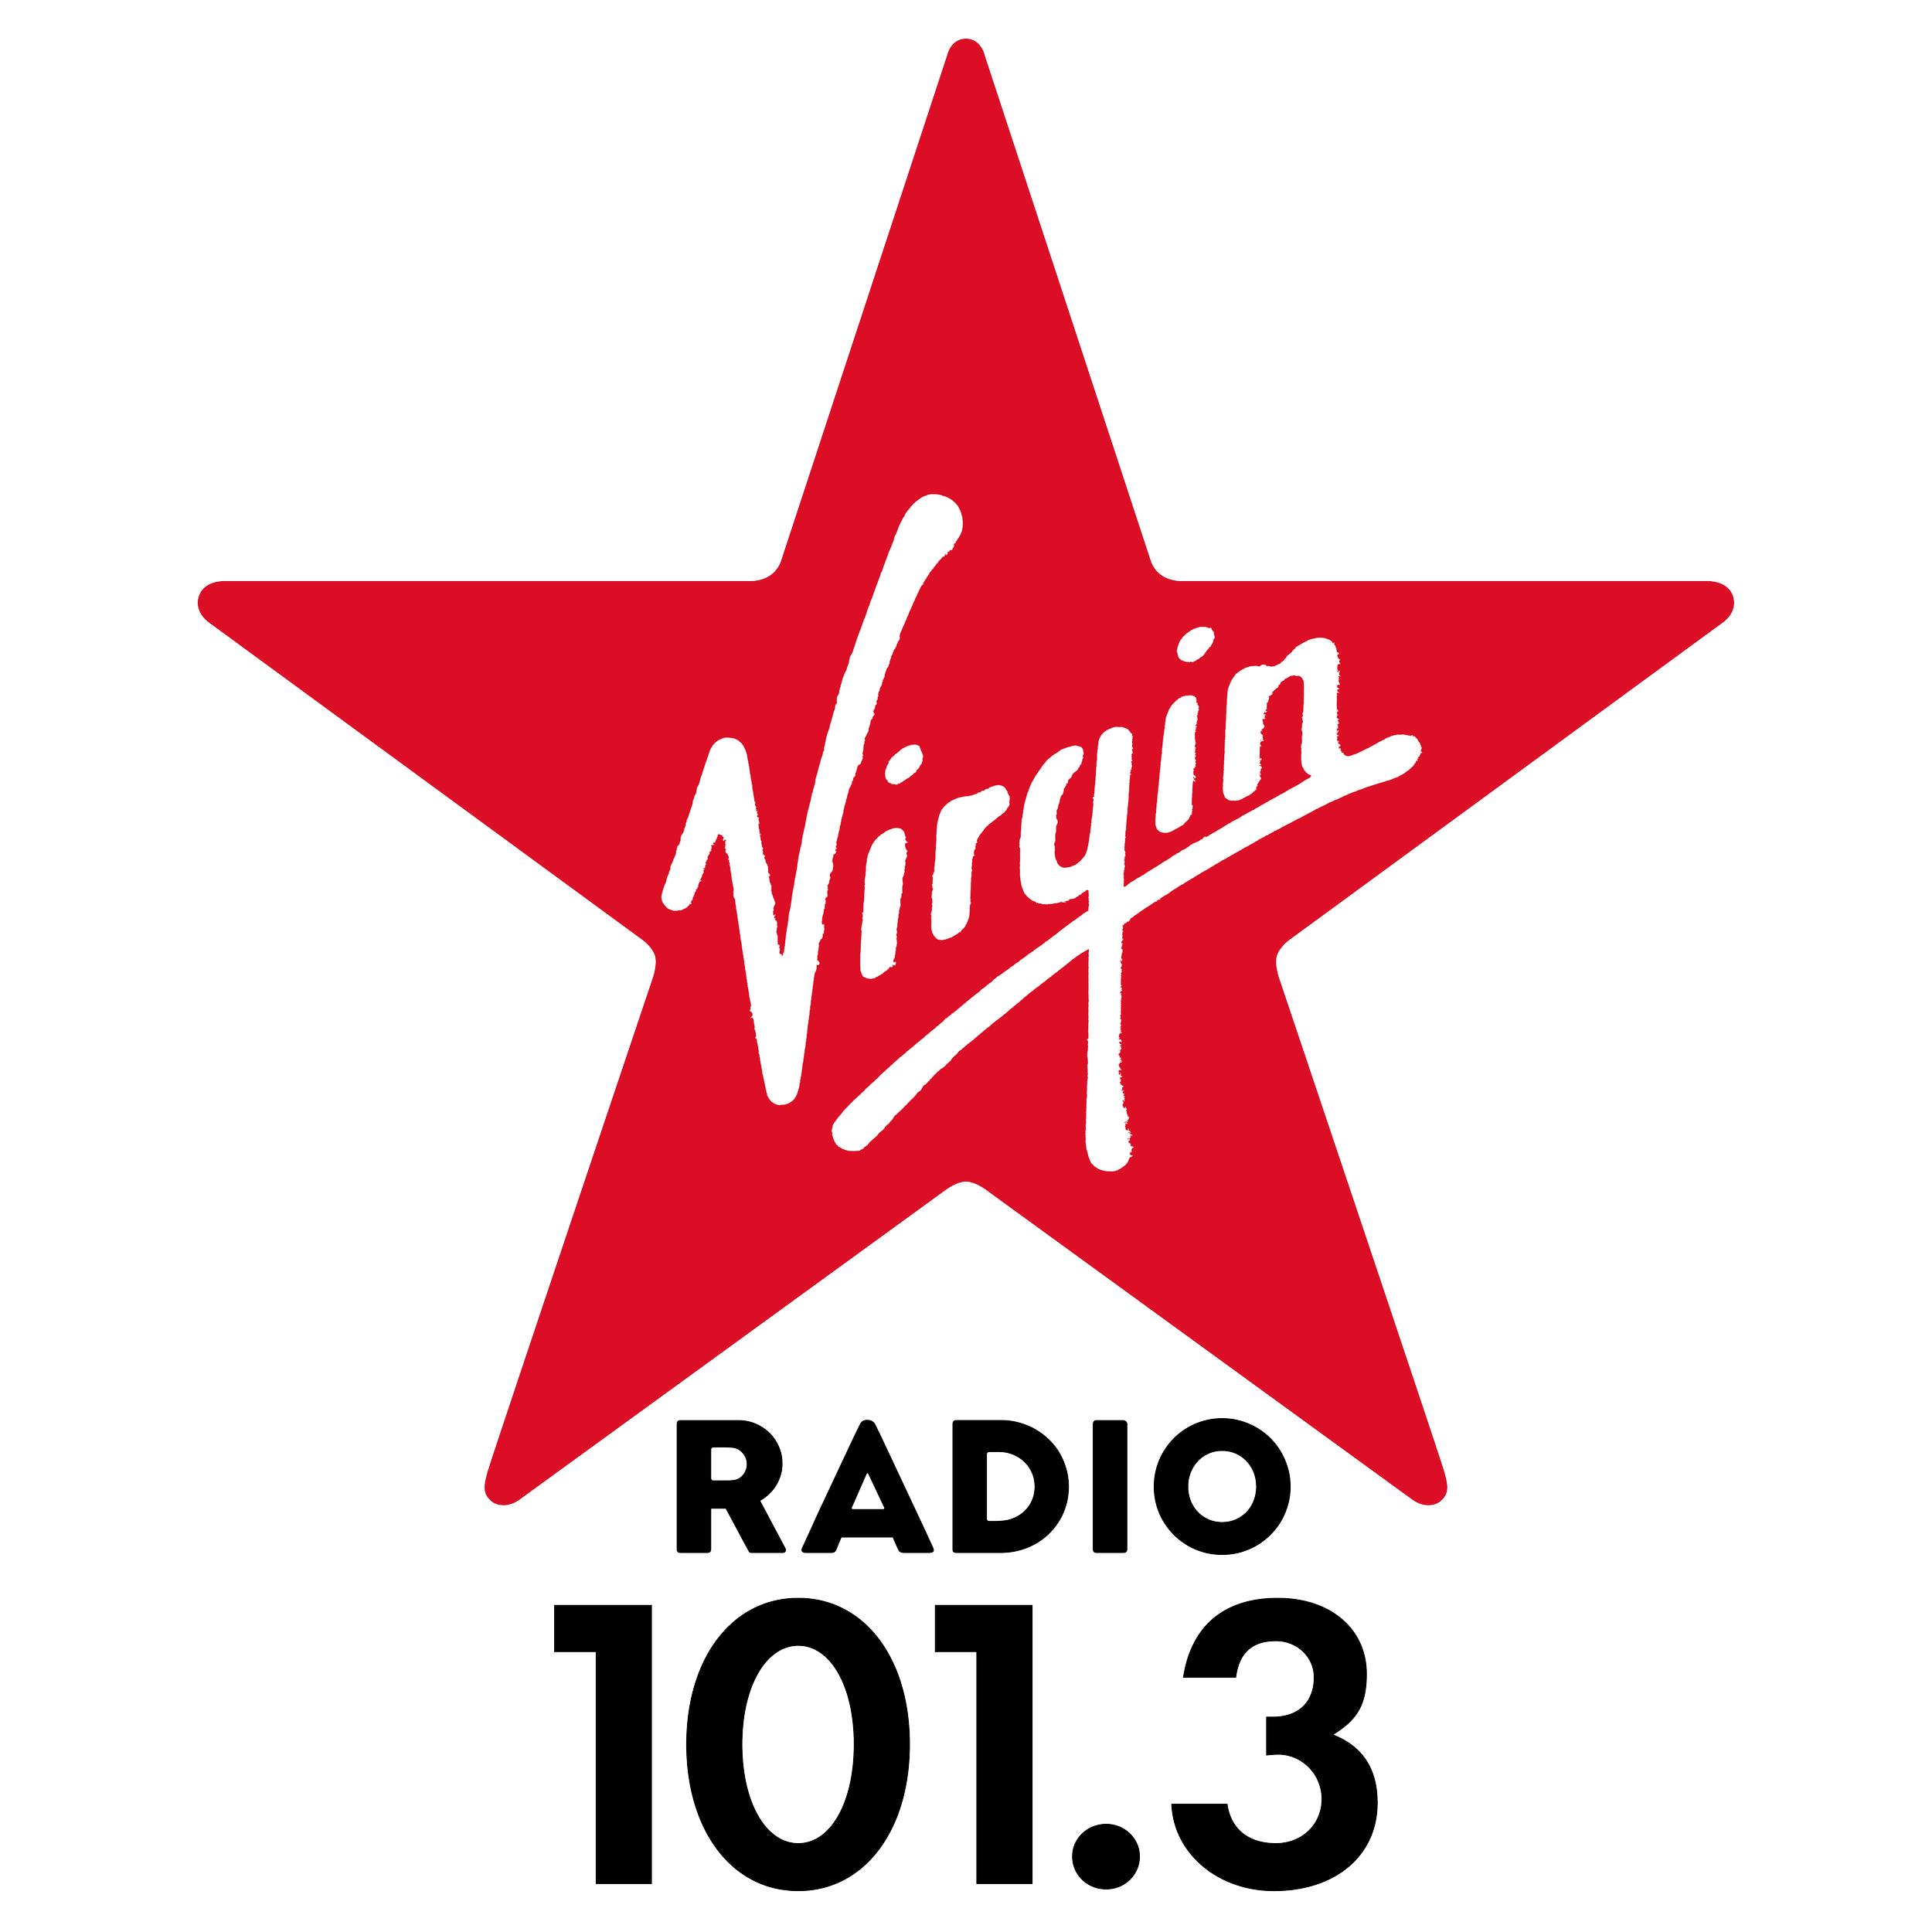 Virgin Radio_Logo_Halifax_GRACoL.png